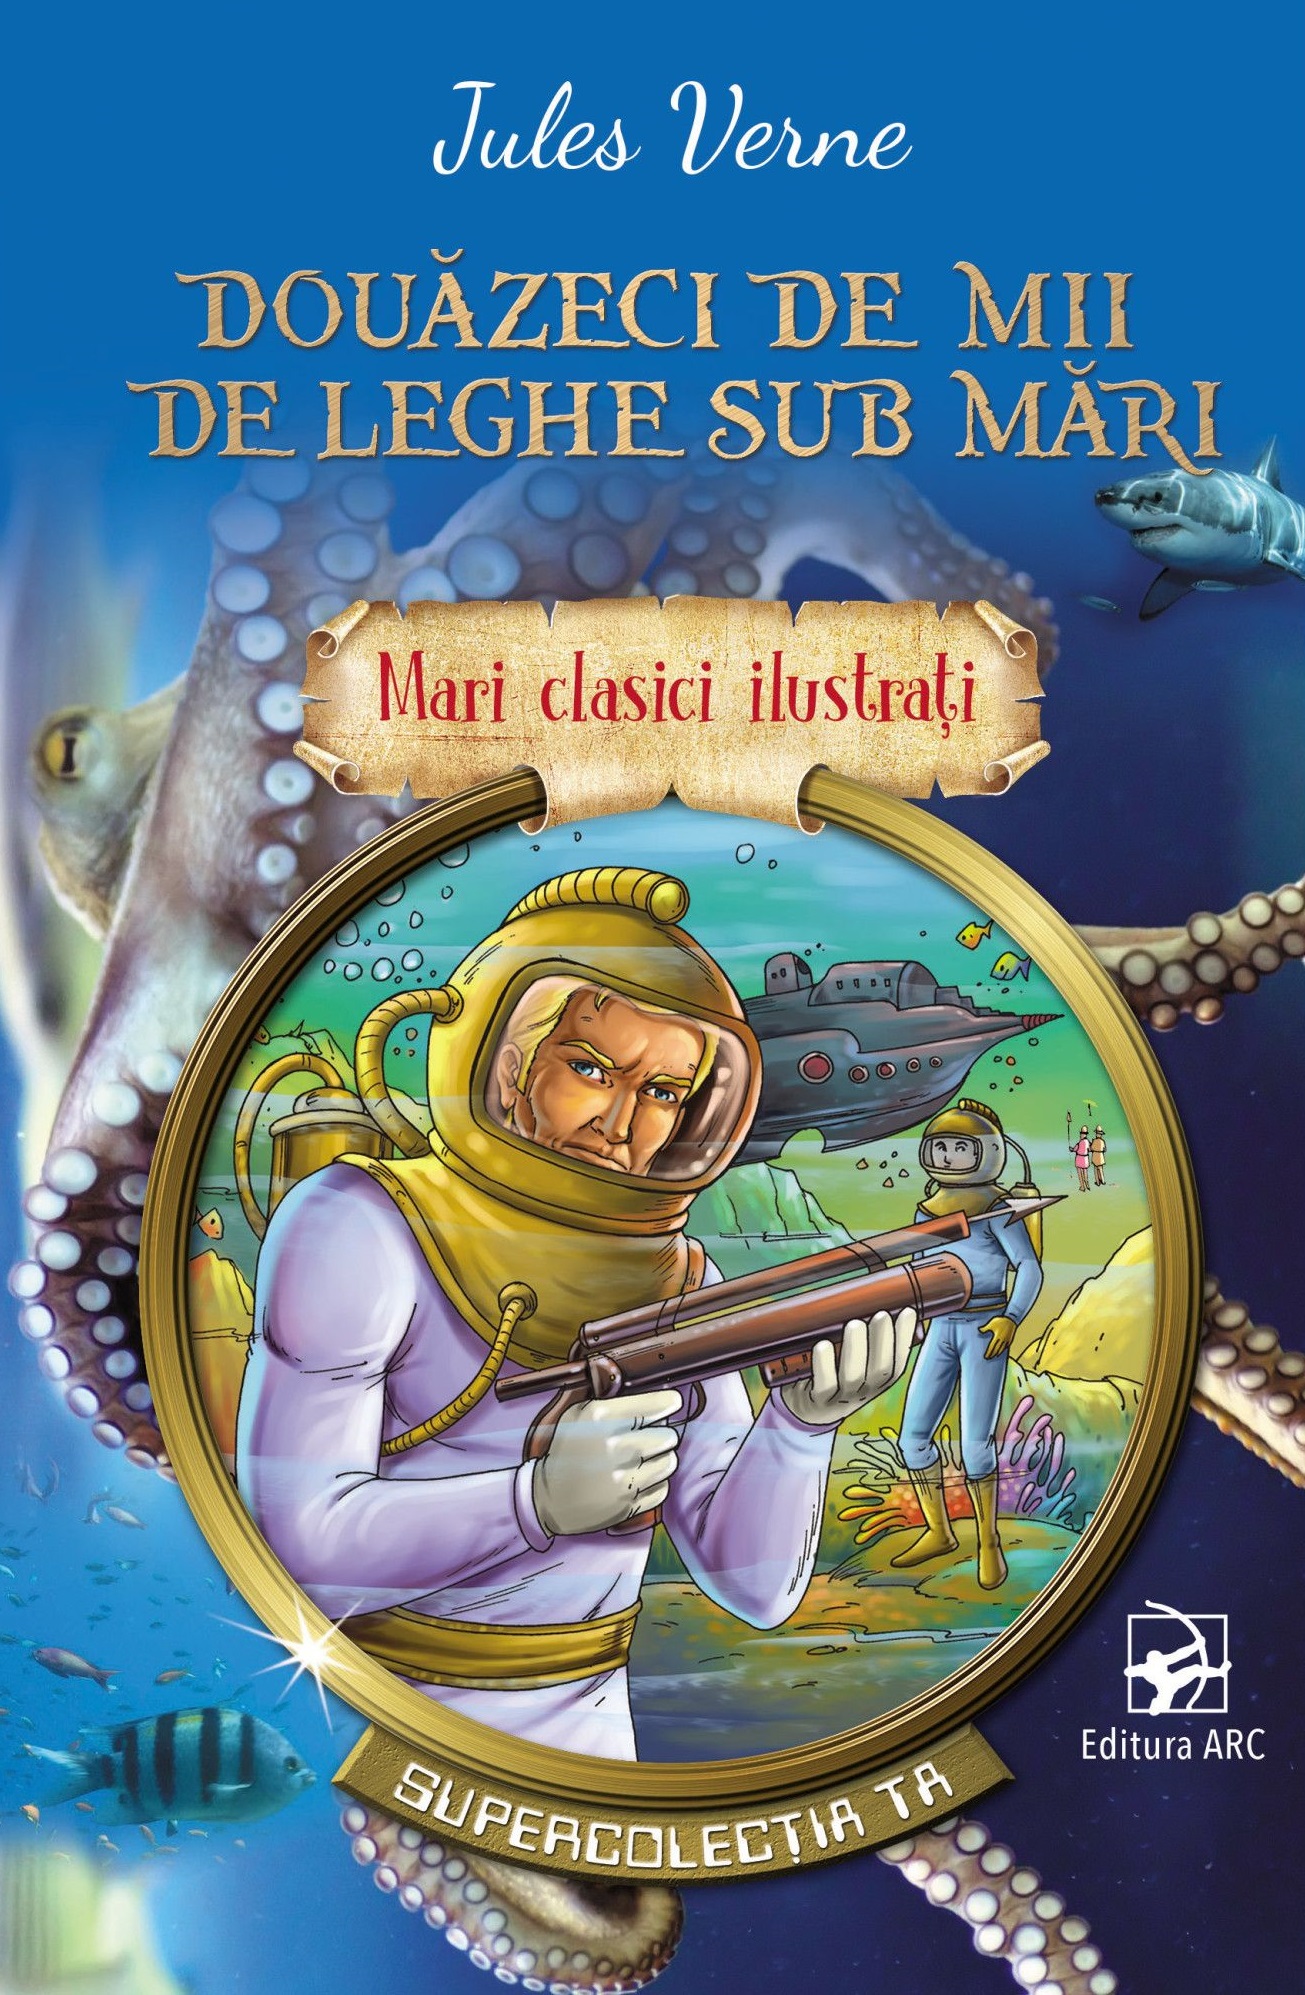 Douazeci de leghe sub mari | Jules Verne ARC 2022